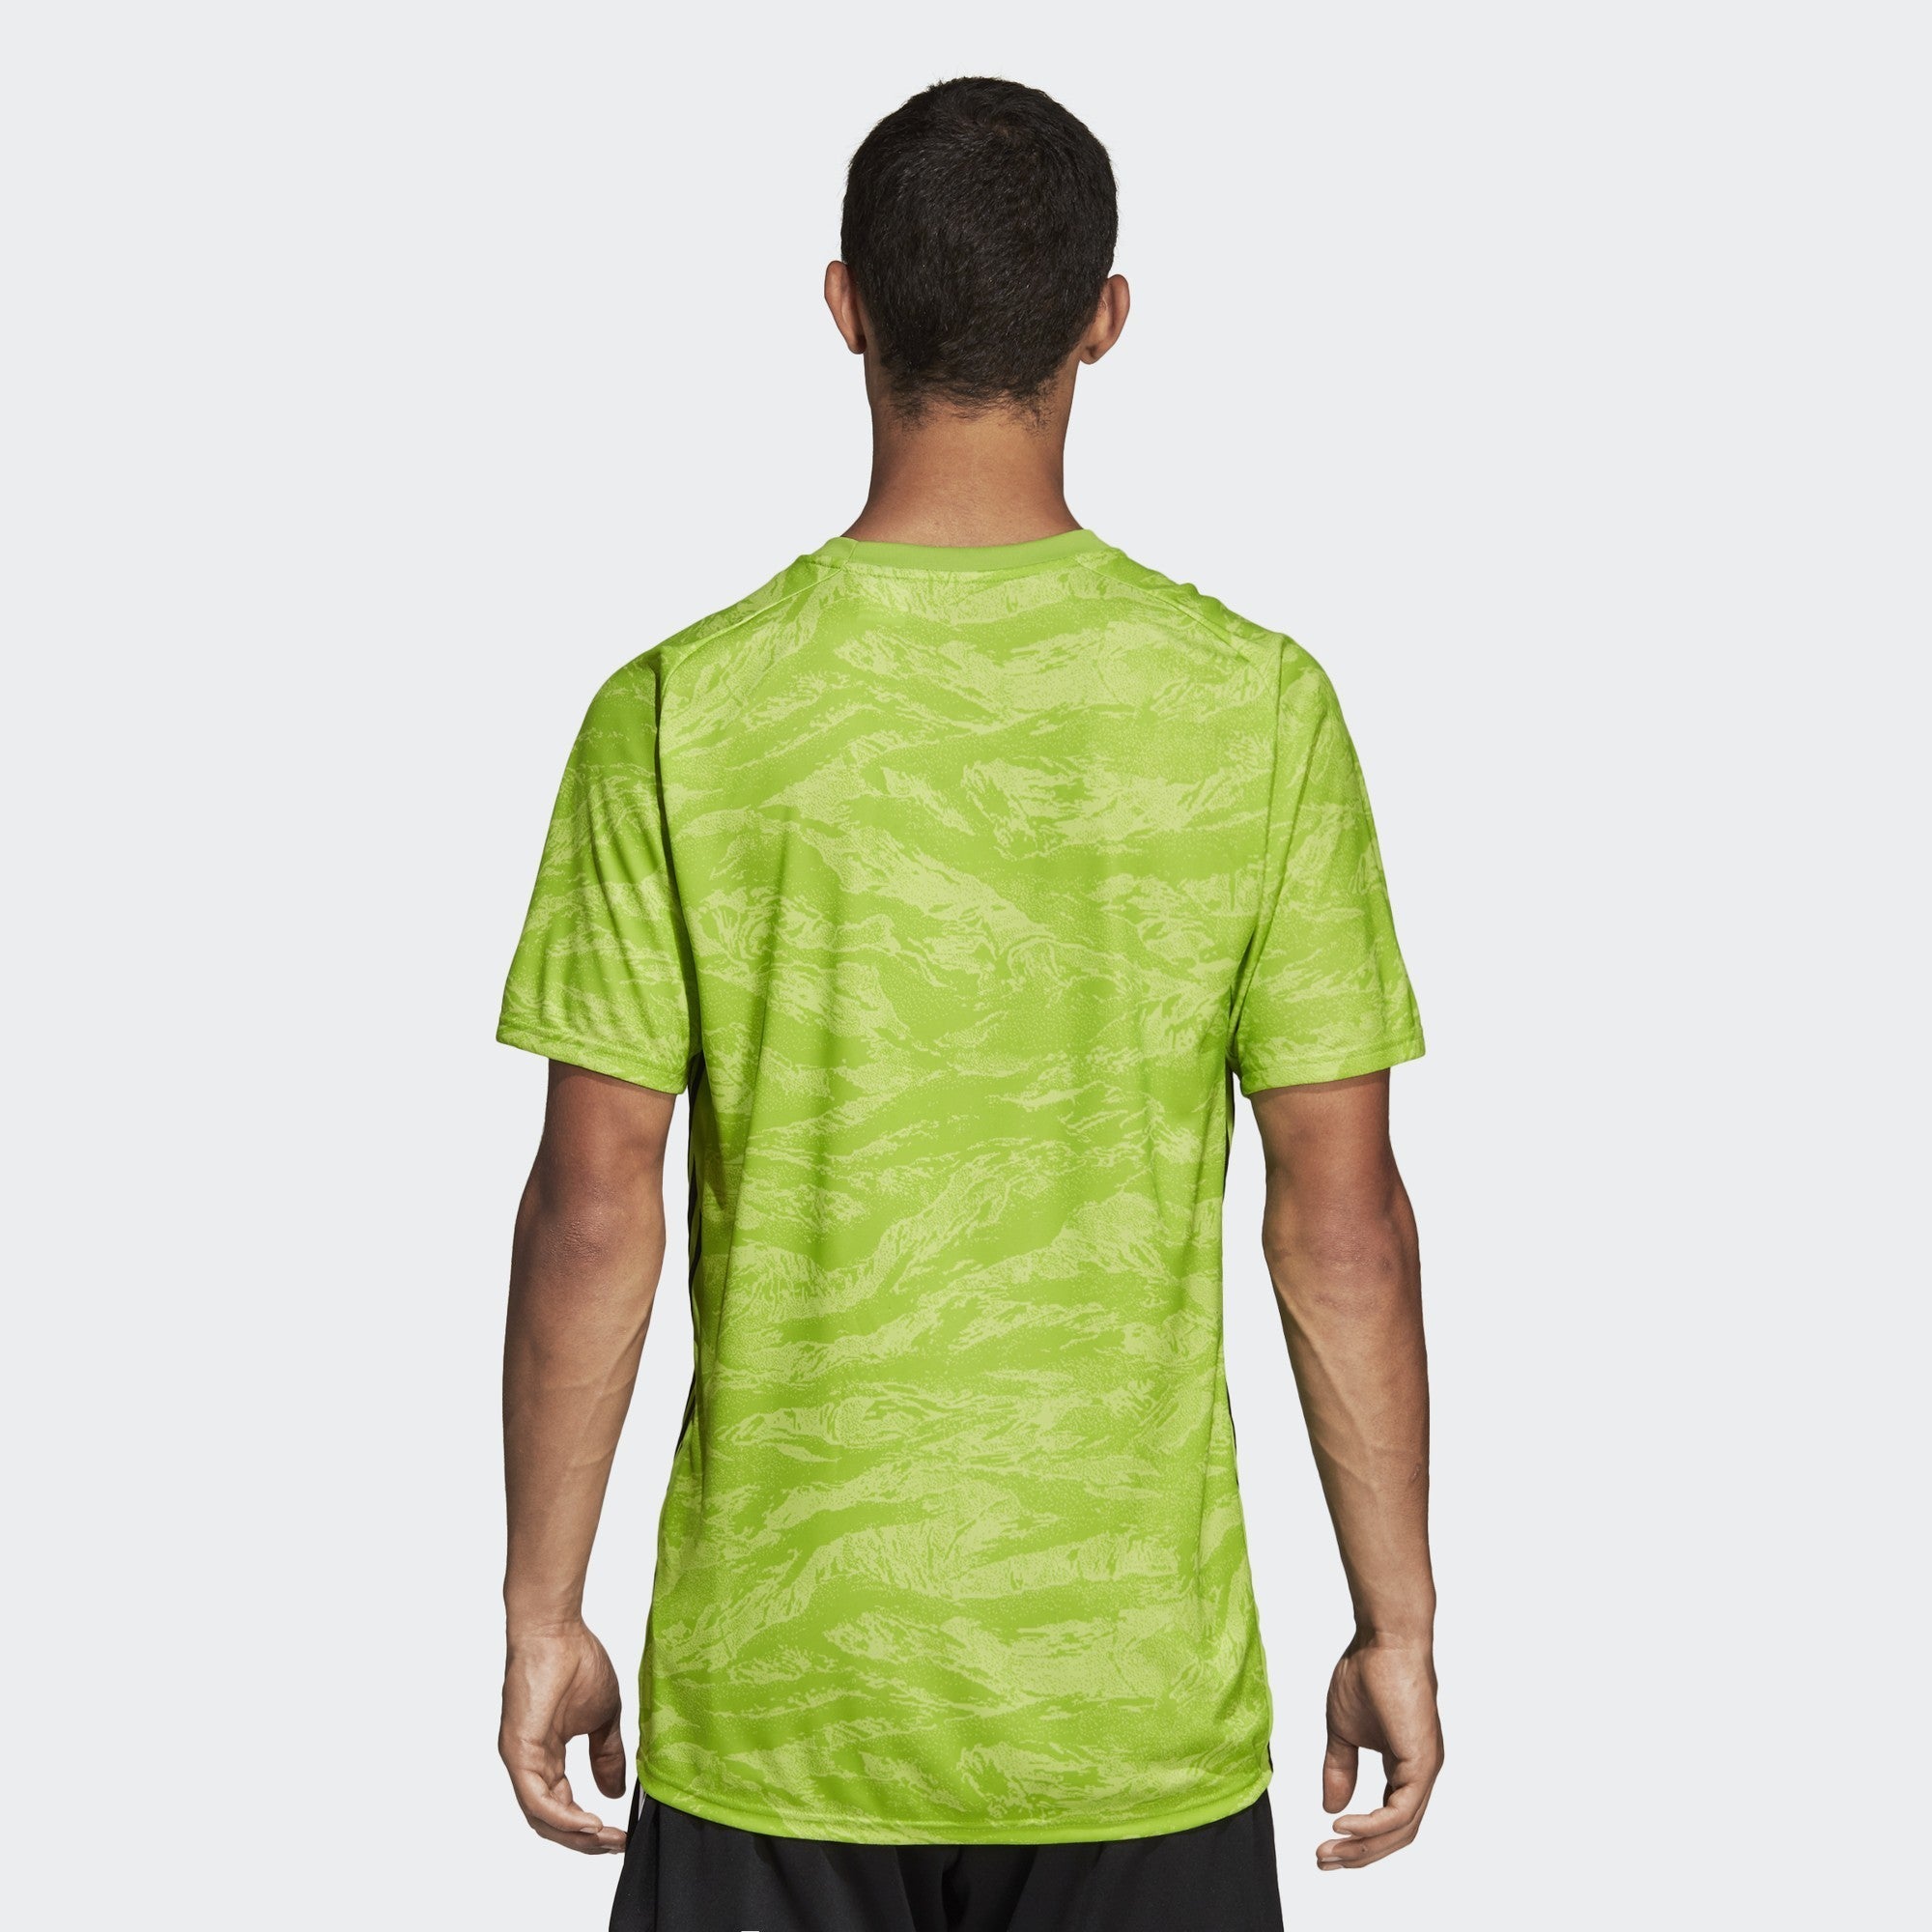 Adidas Adipro 19 Short Sleeve Goalkeeper Jersey - Green - XL